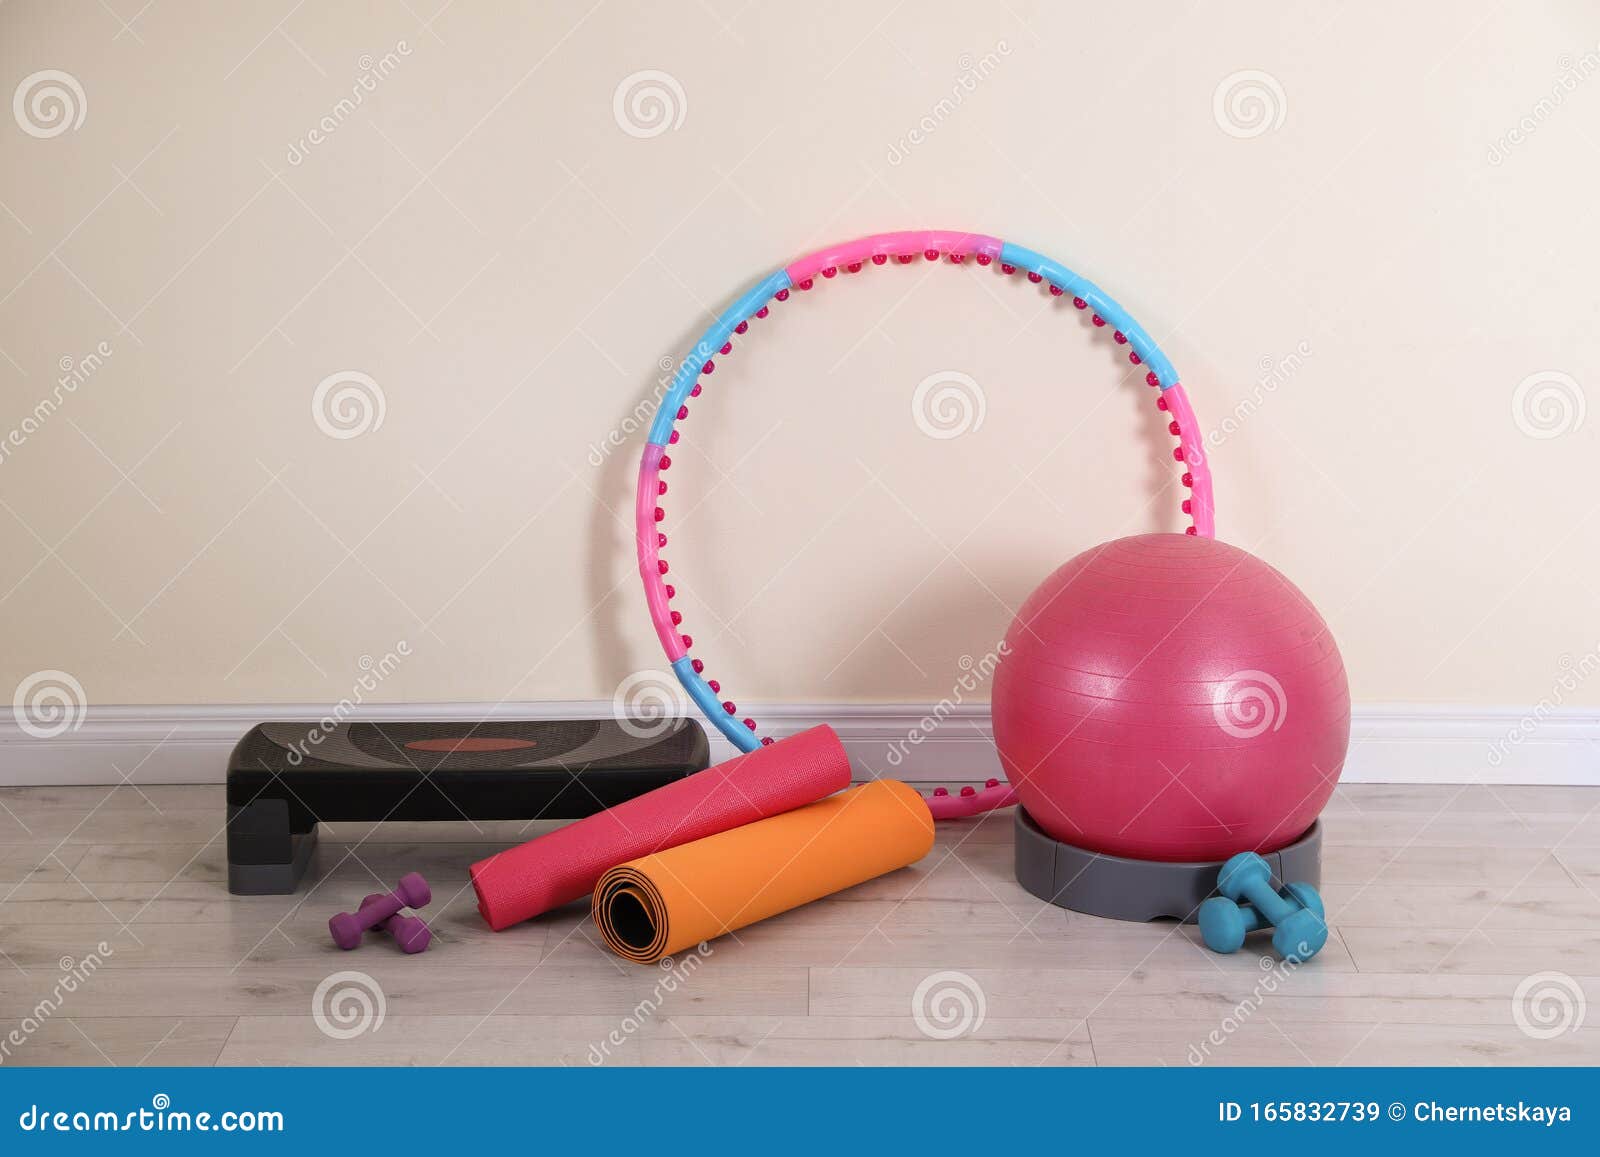 Different Sports Equipment Near Light Wall Stock Image - Image of hoop, orthopedist: 165832739